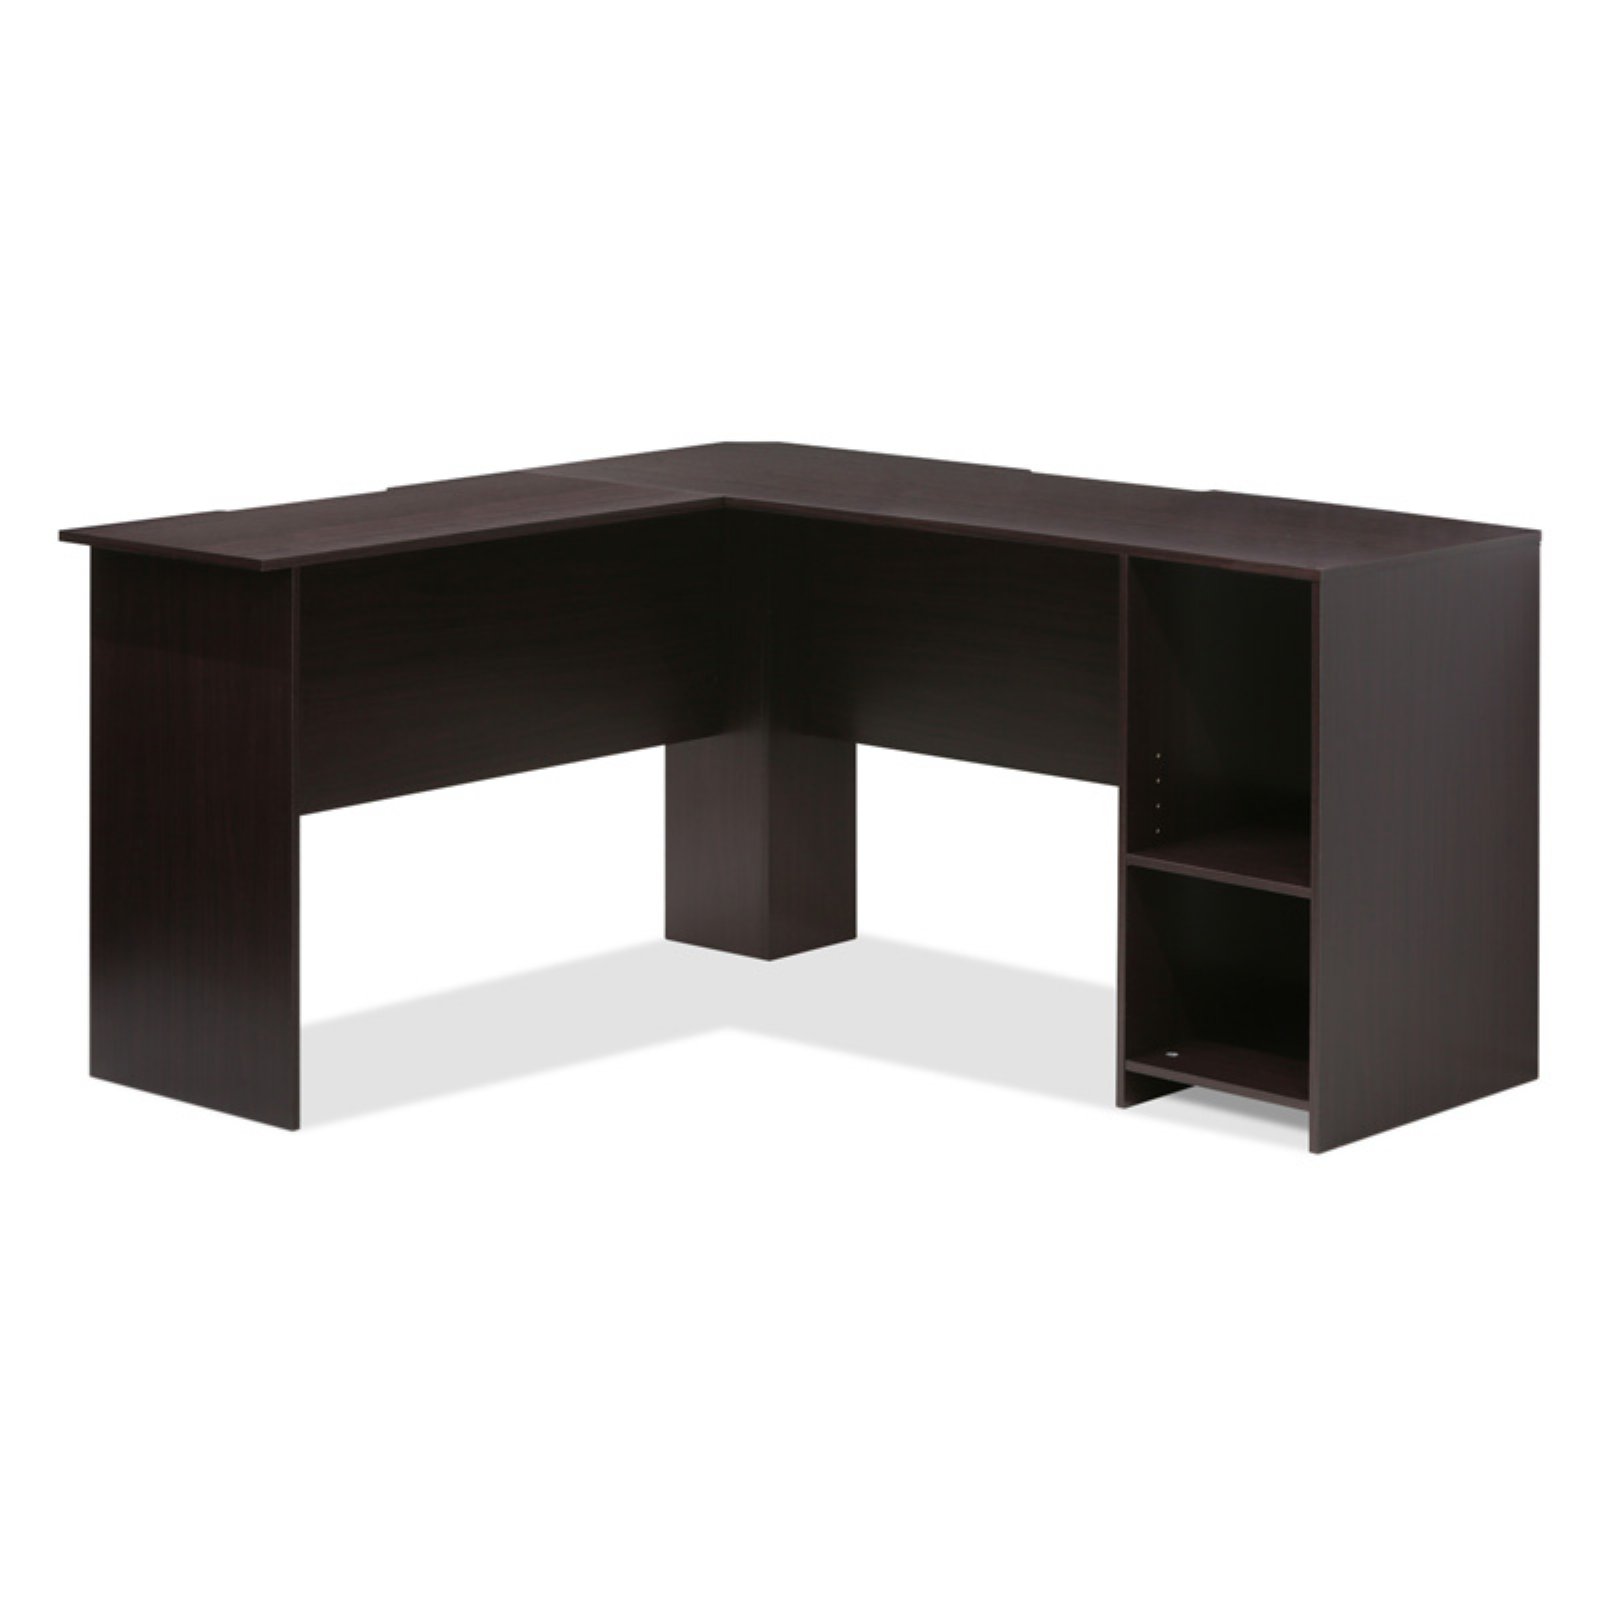 Furinno Indo L-Shaped Desk with Bookshelves, Espresso - image 4 of 8